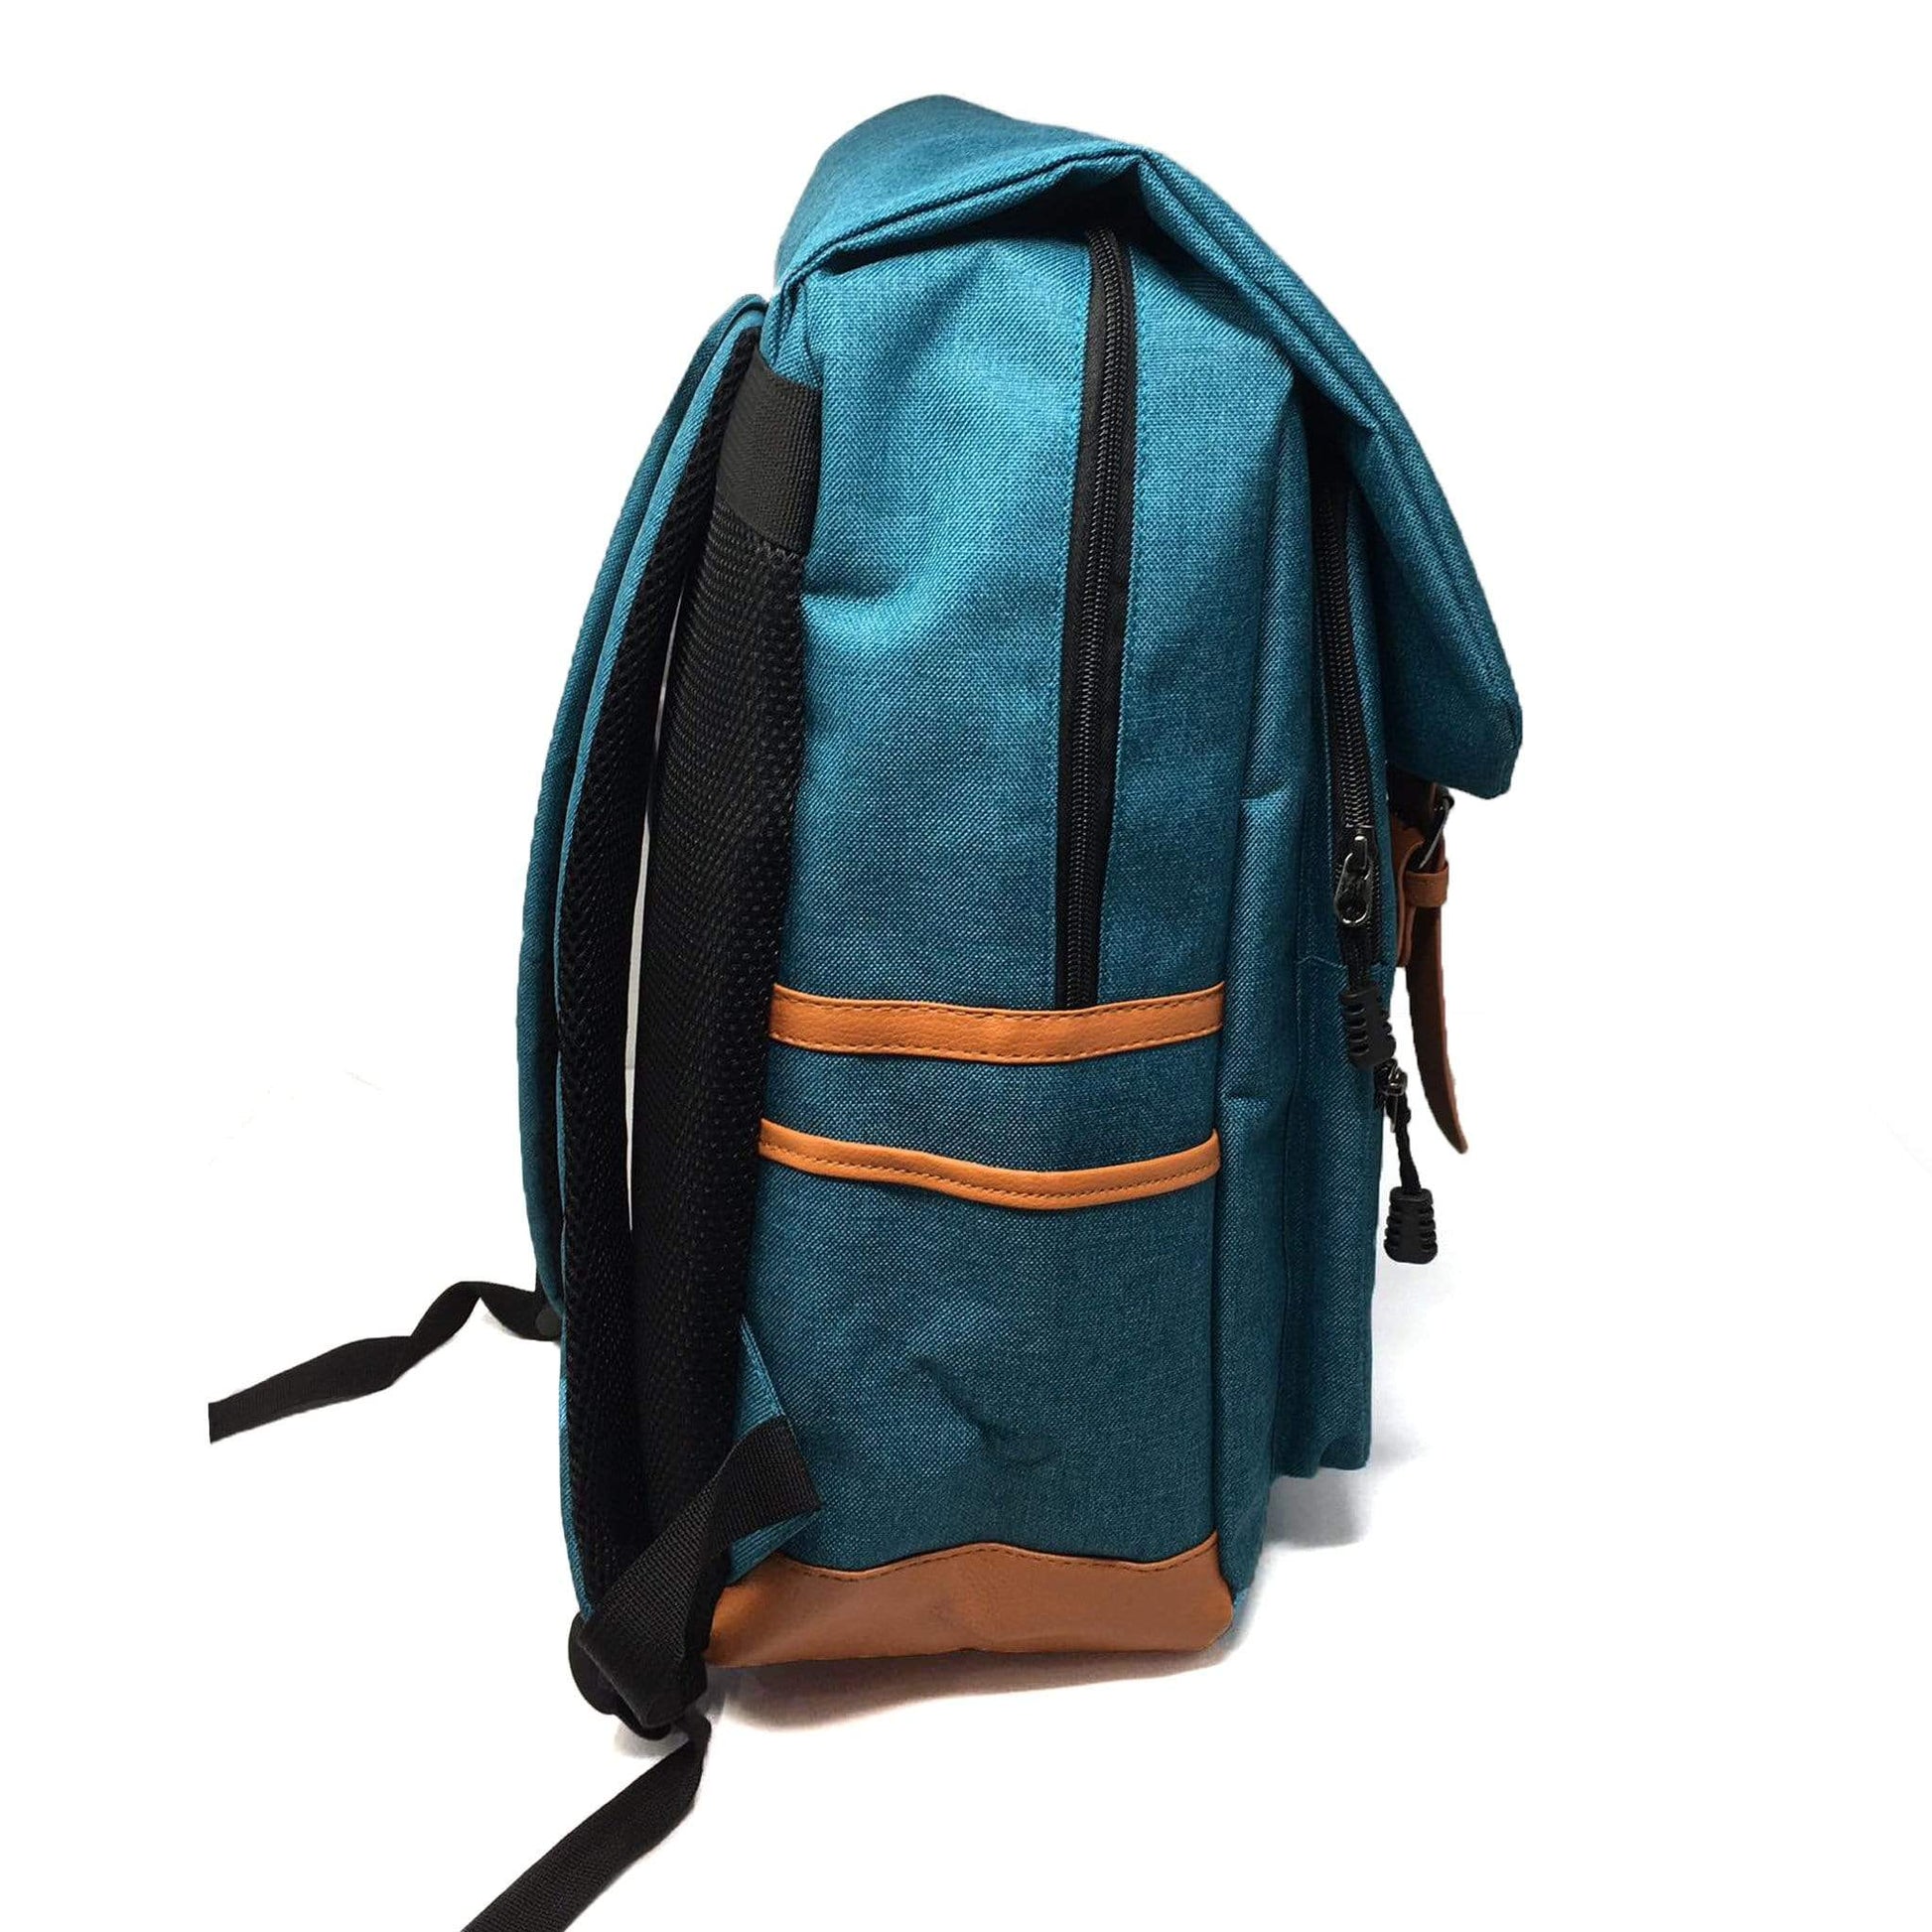 The Kai Ting Backpacks & Luggage Backpack Suitcase